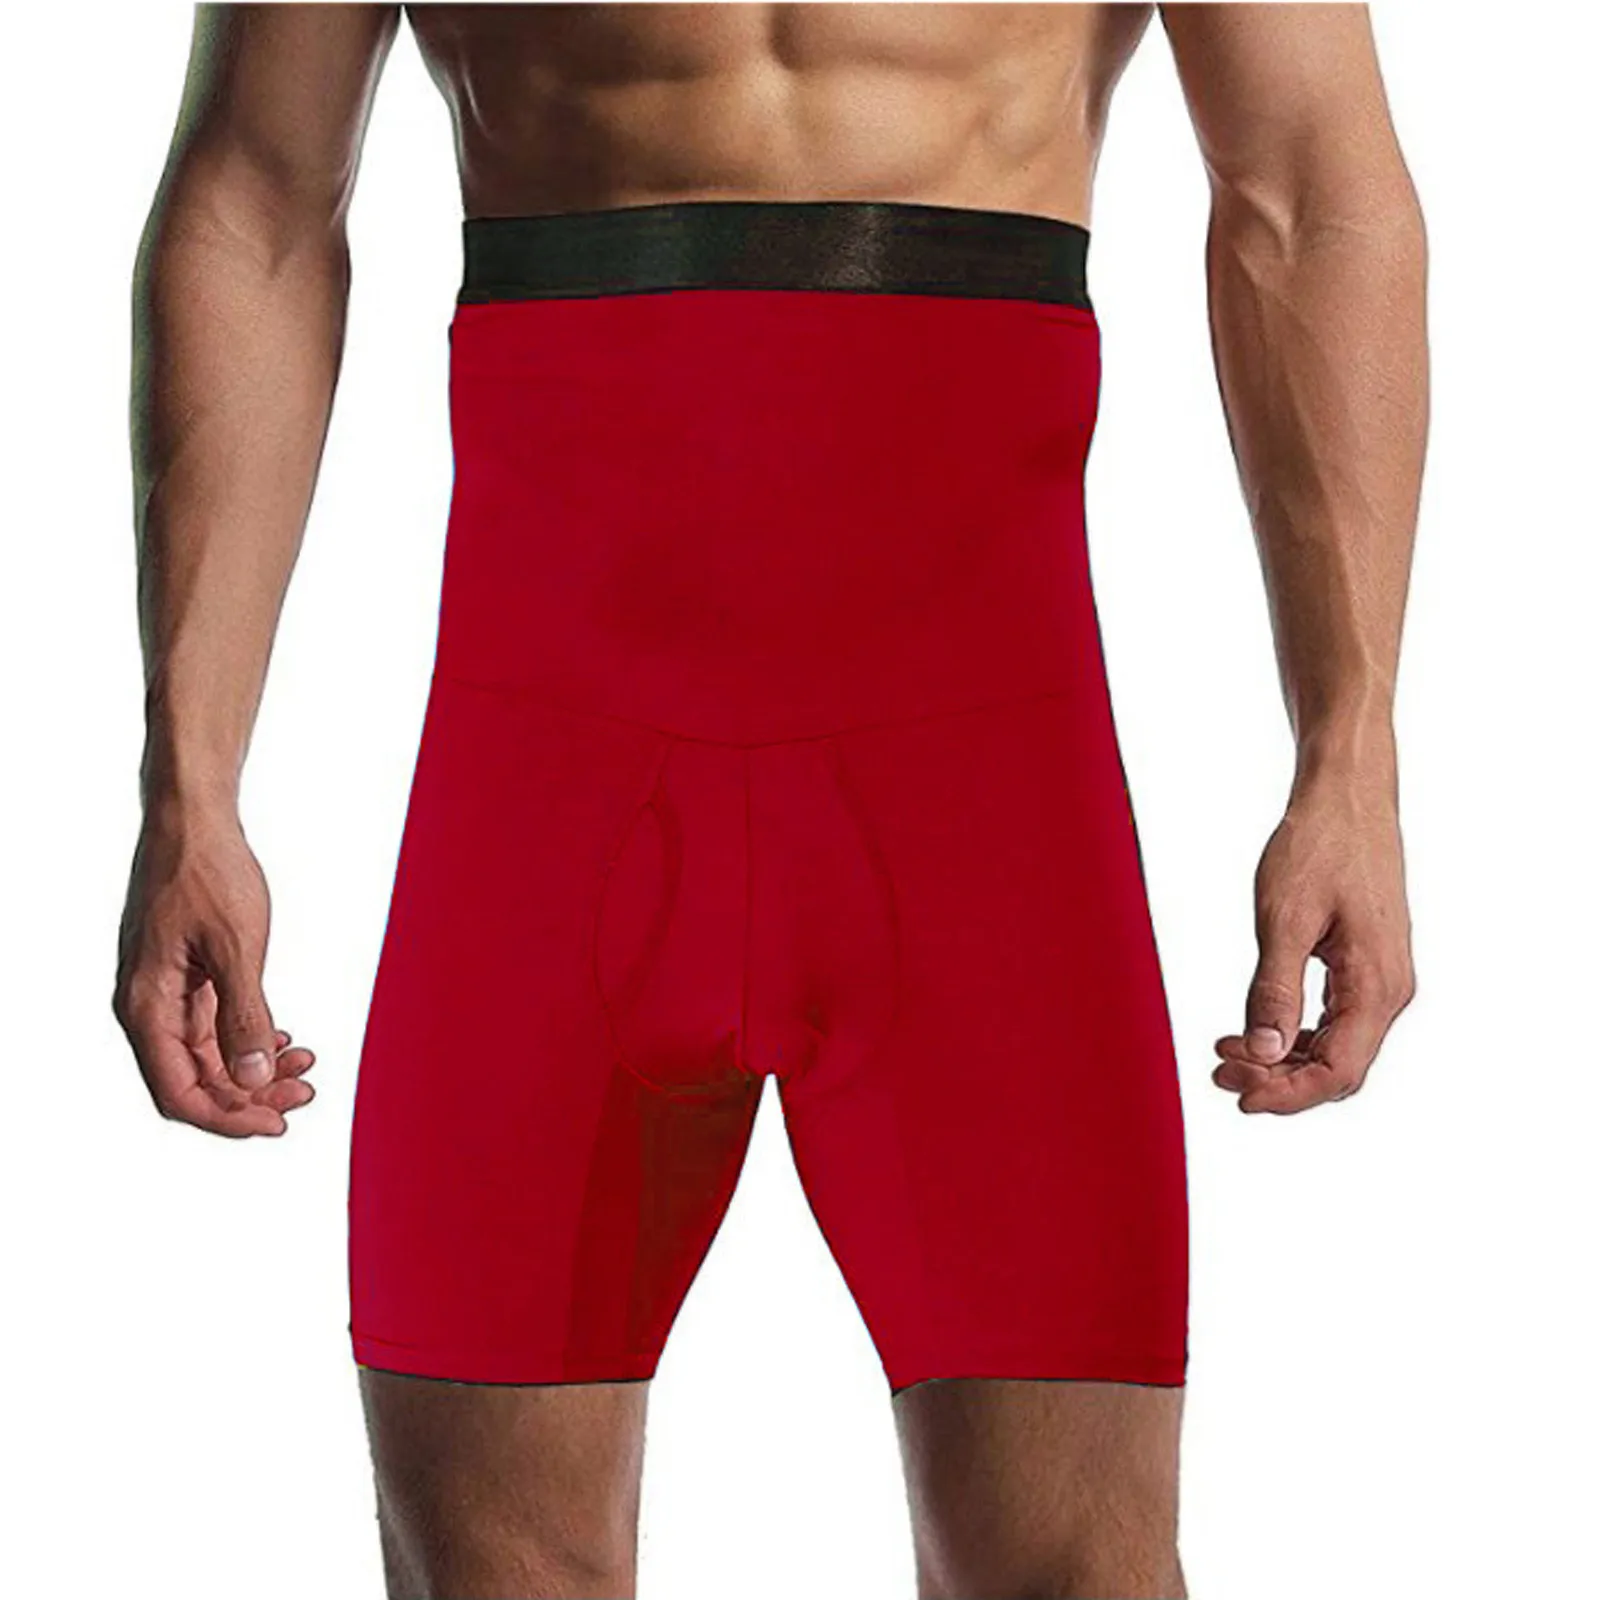 TAILONG Men Tummy Control Shorts High Waist Slimming Underwear Body Shaper  Seamless Belly Girdle Boxer Briefs